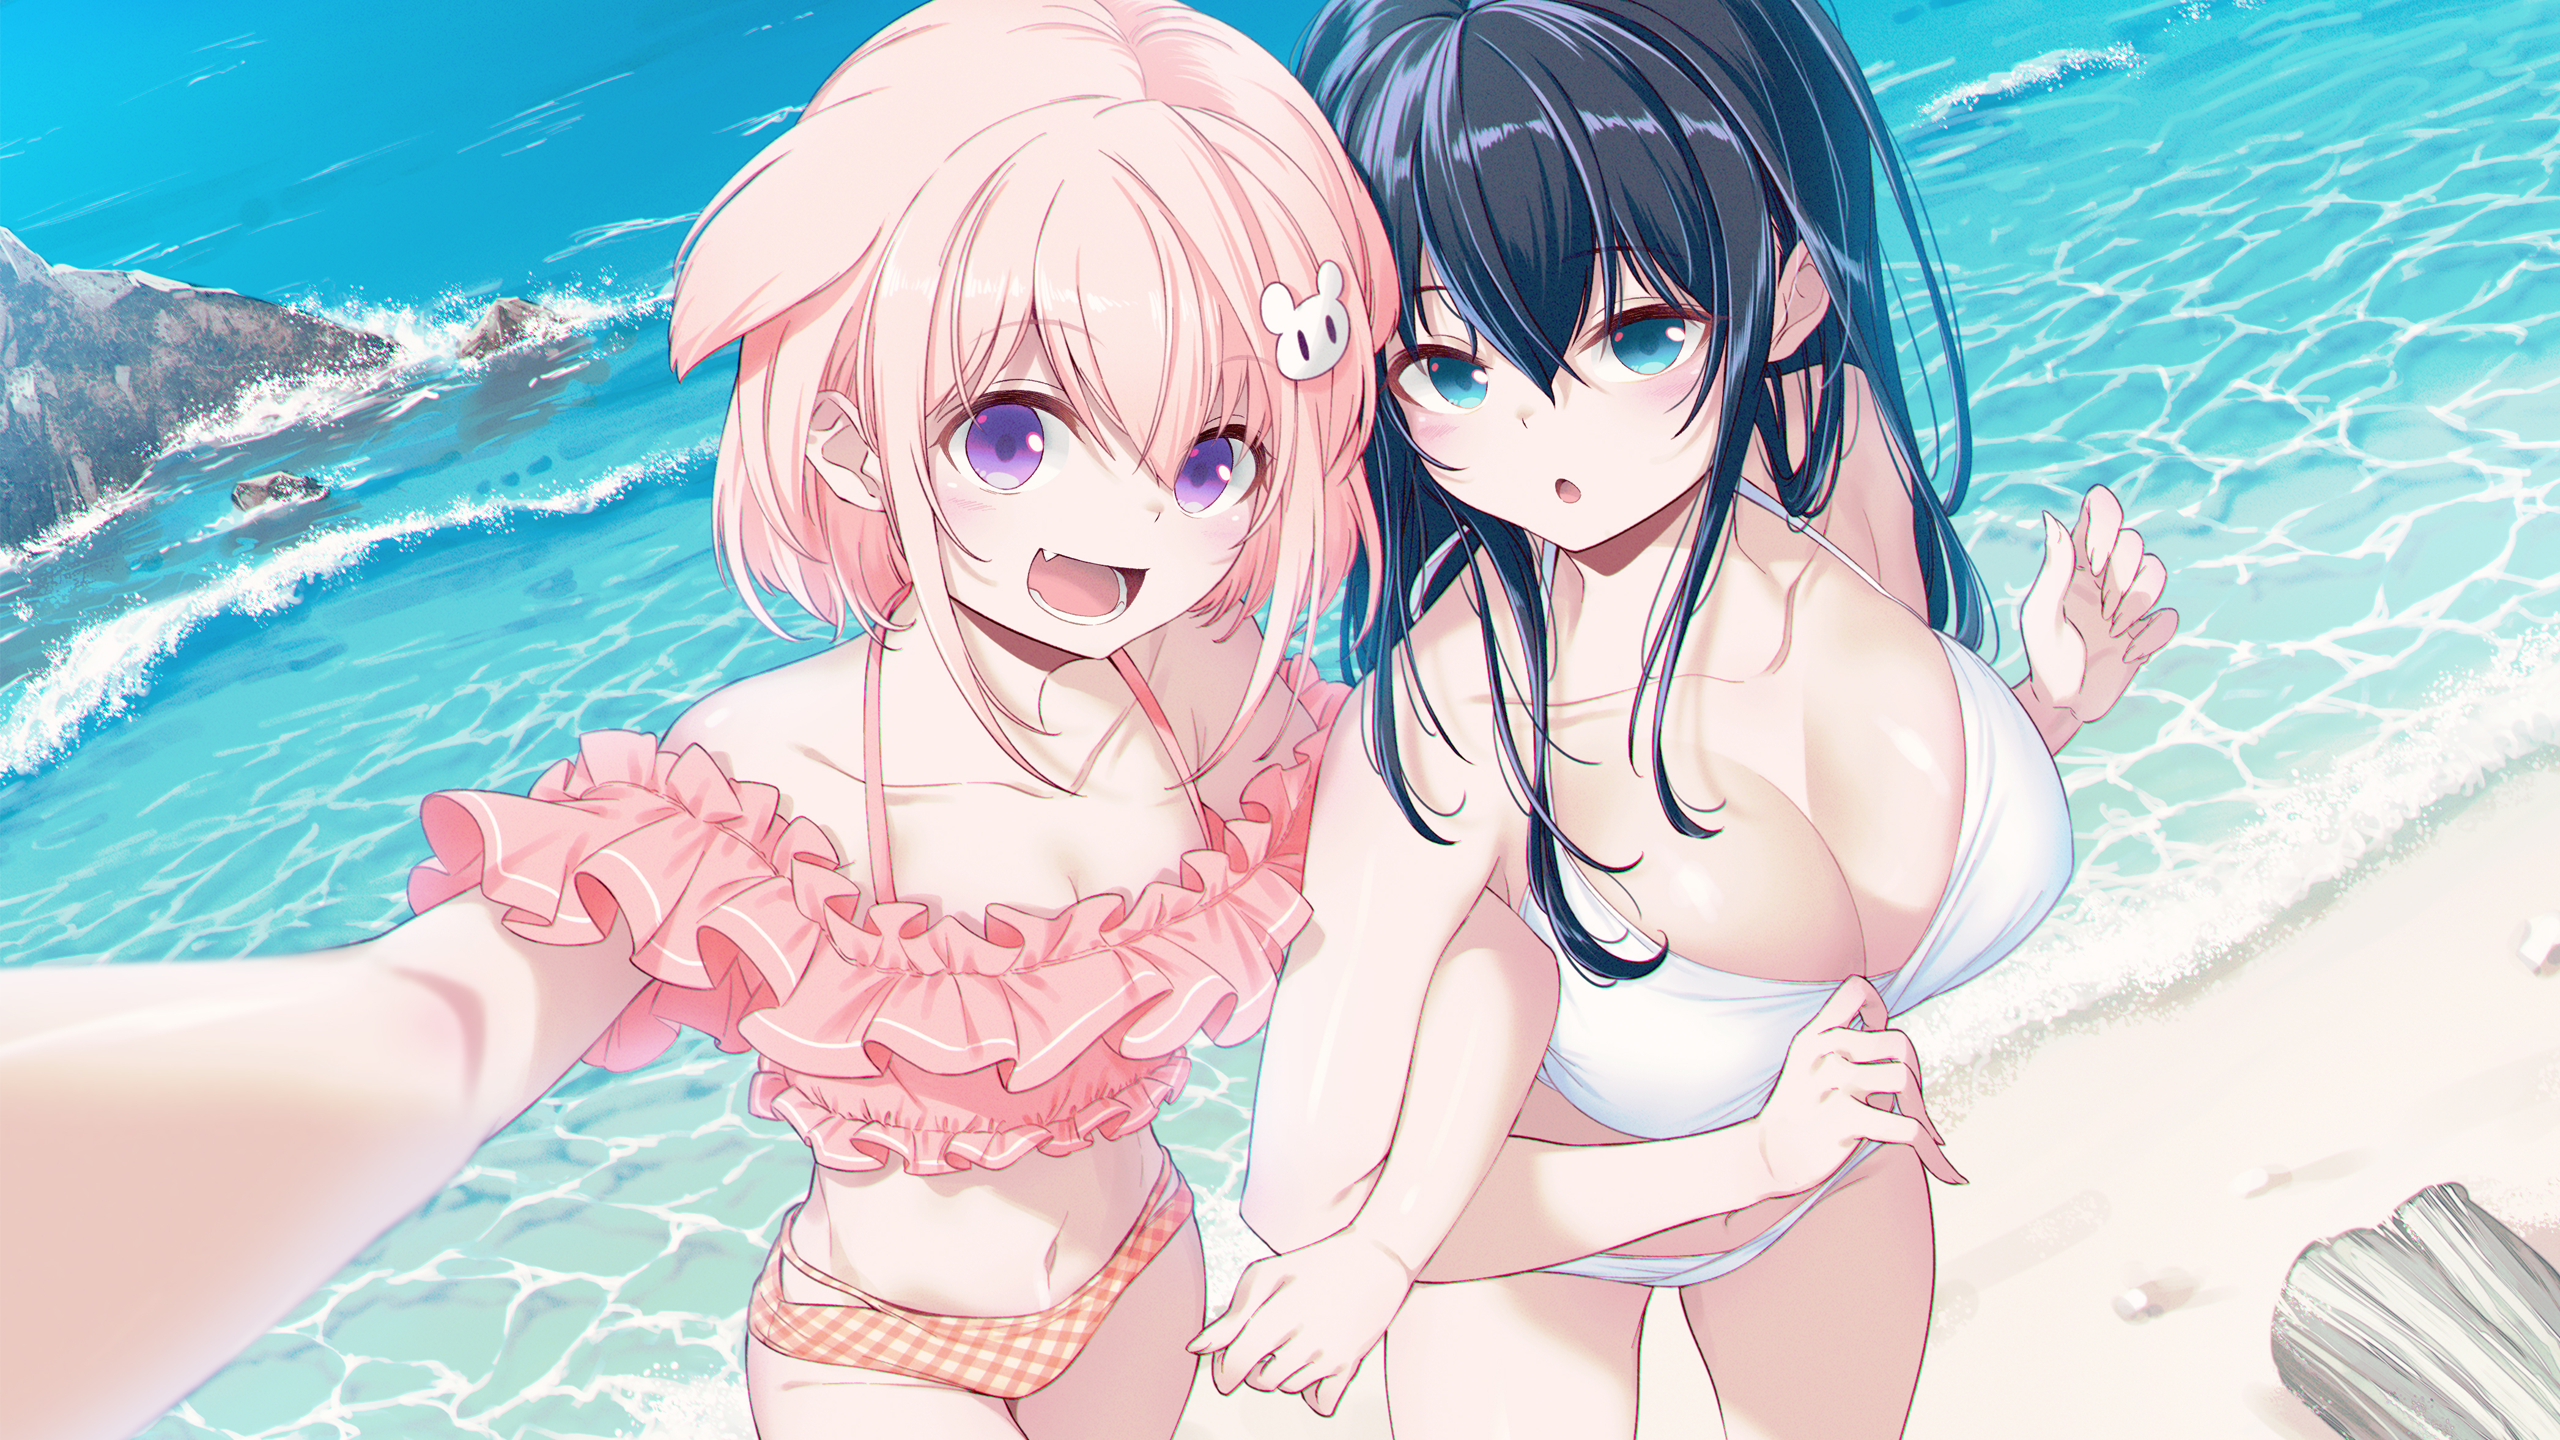 Anime 2560x1440 anime anime girls boobs big boobs cleavage swimwear white swimsuit thighs beach summer pink swimsuit bikini white bikini 40hara artwork selfies